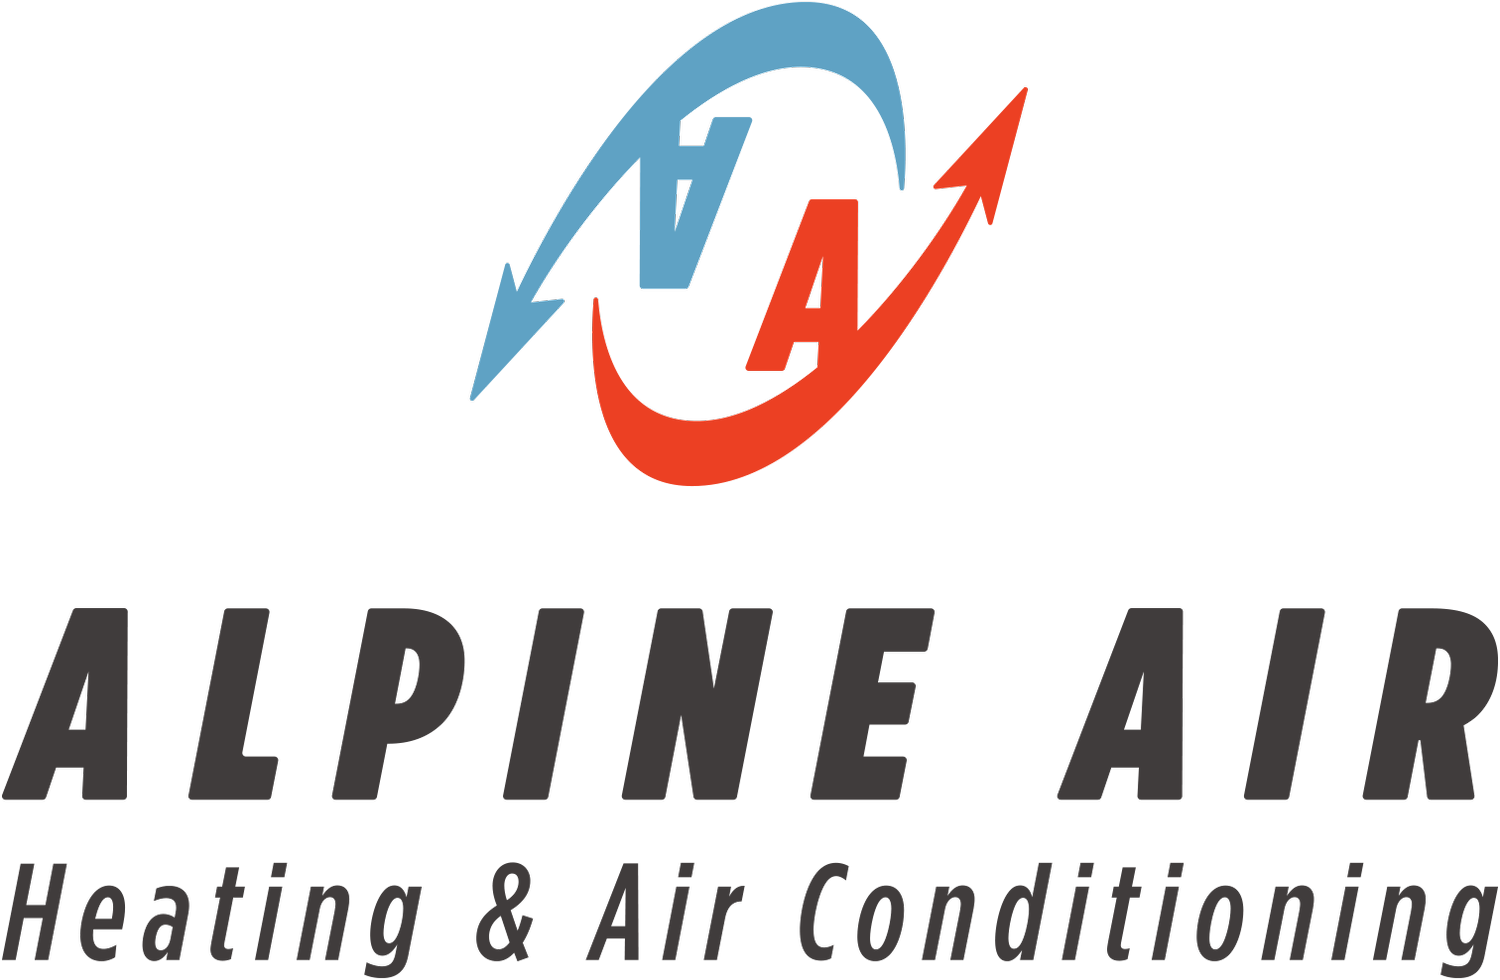 Alpine Air